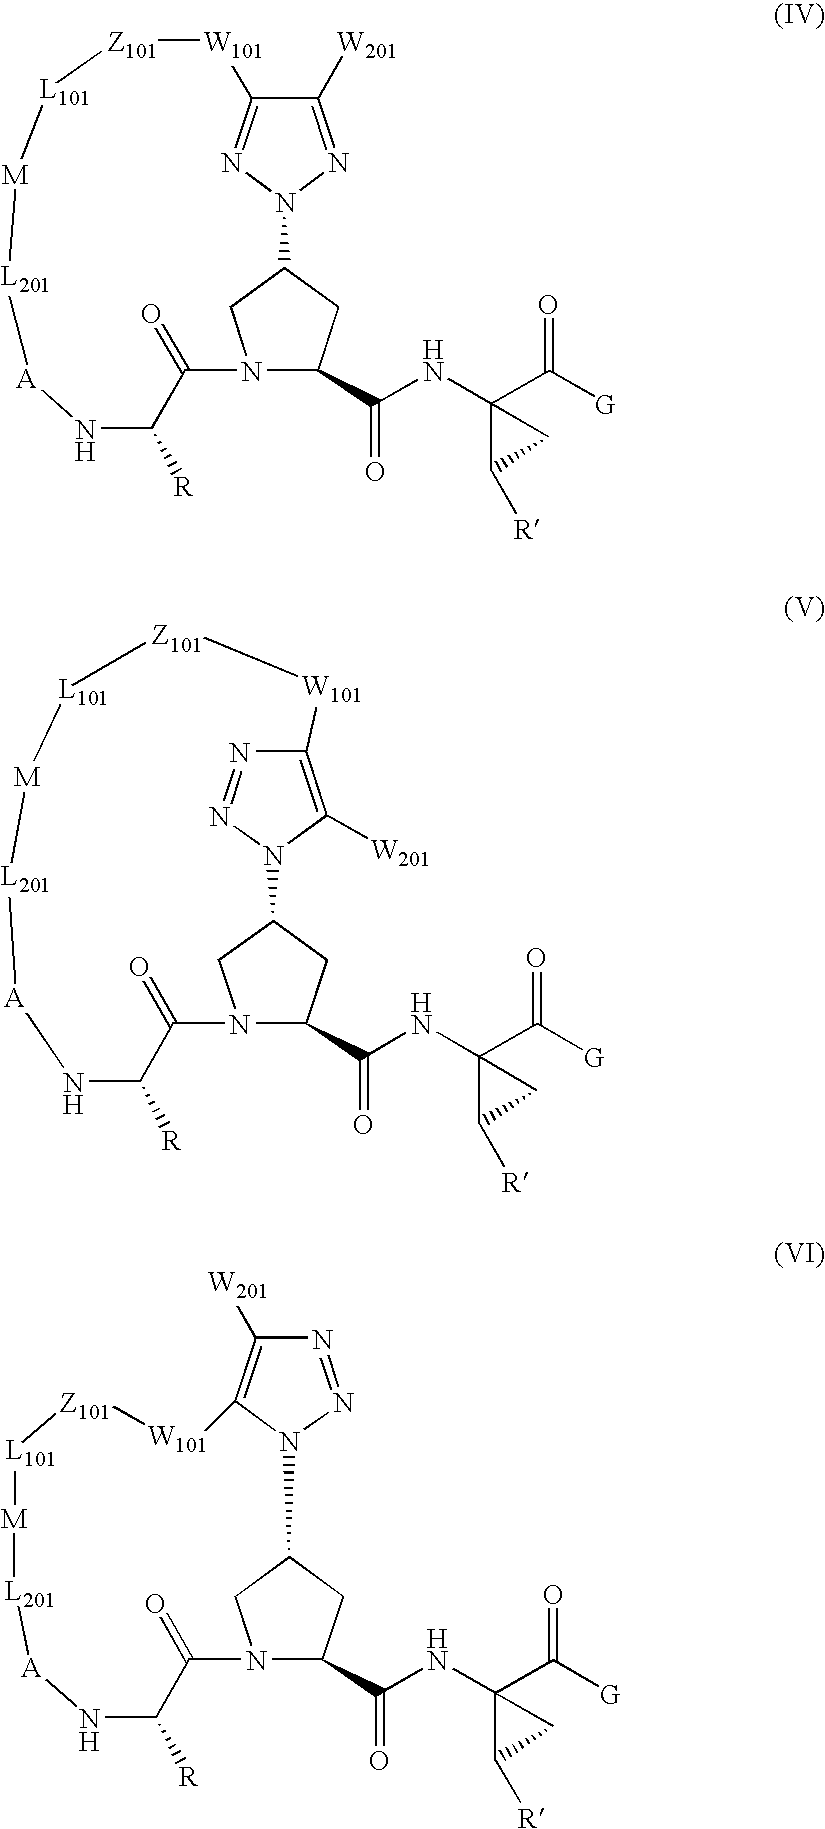 Triazole-containing macrocyclic hcv serine protease inhibitors